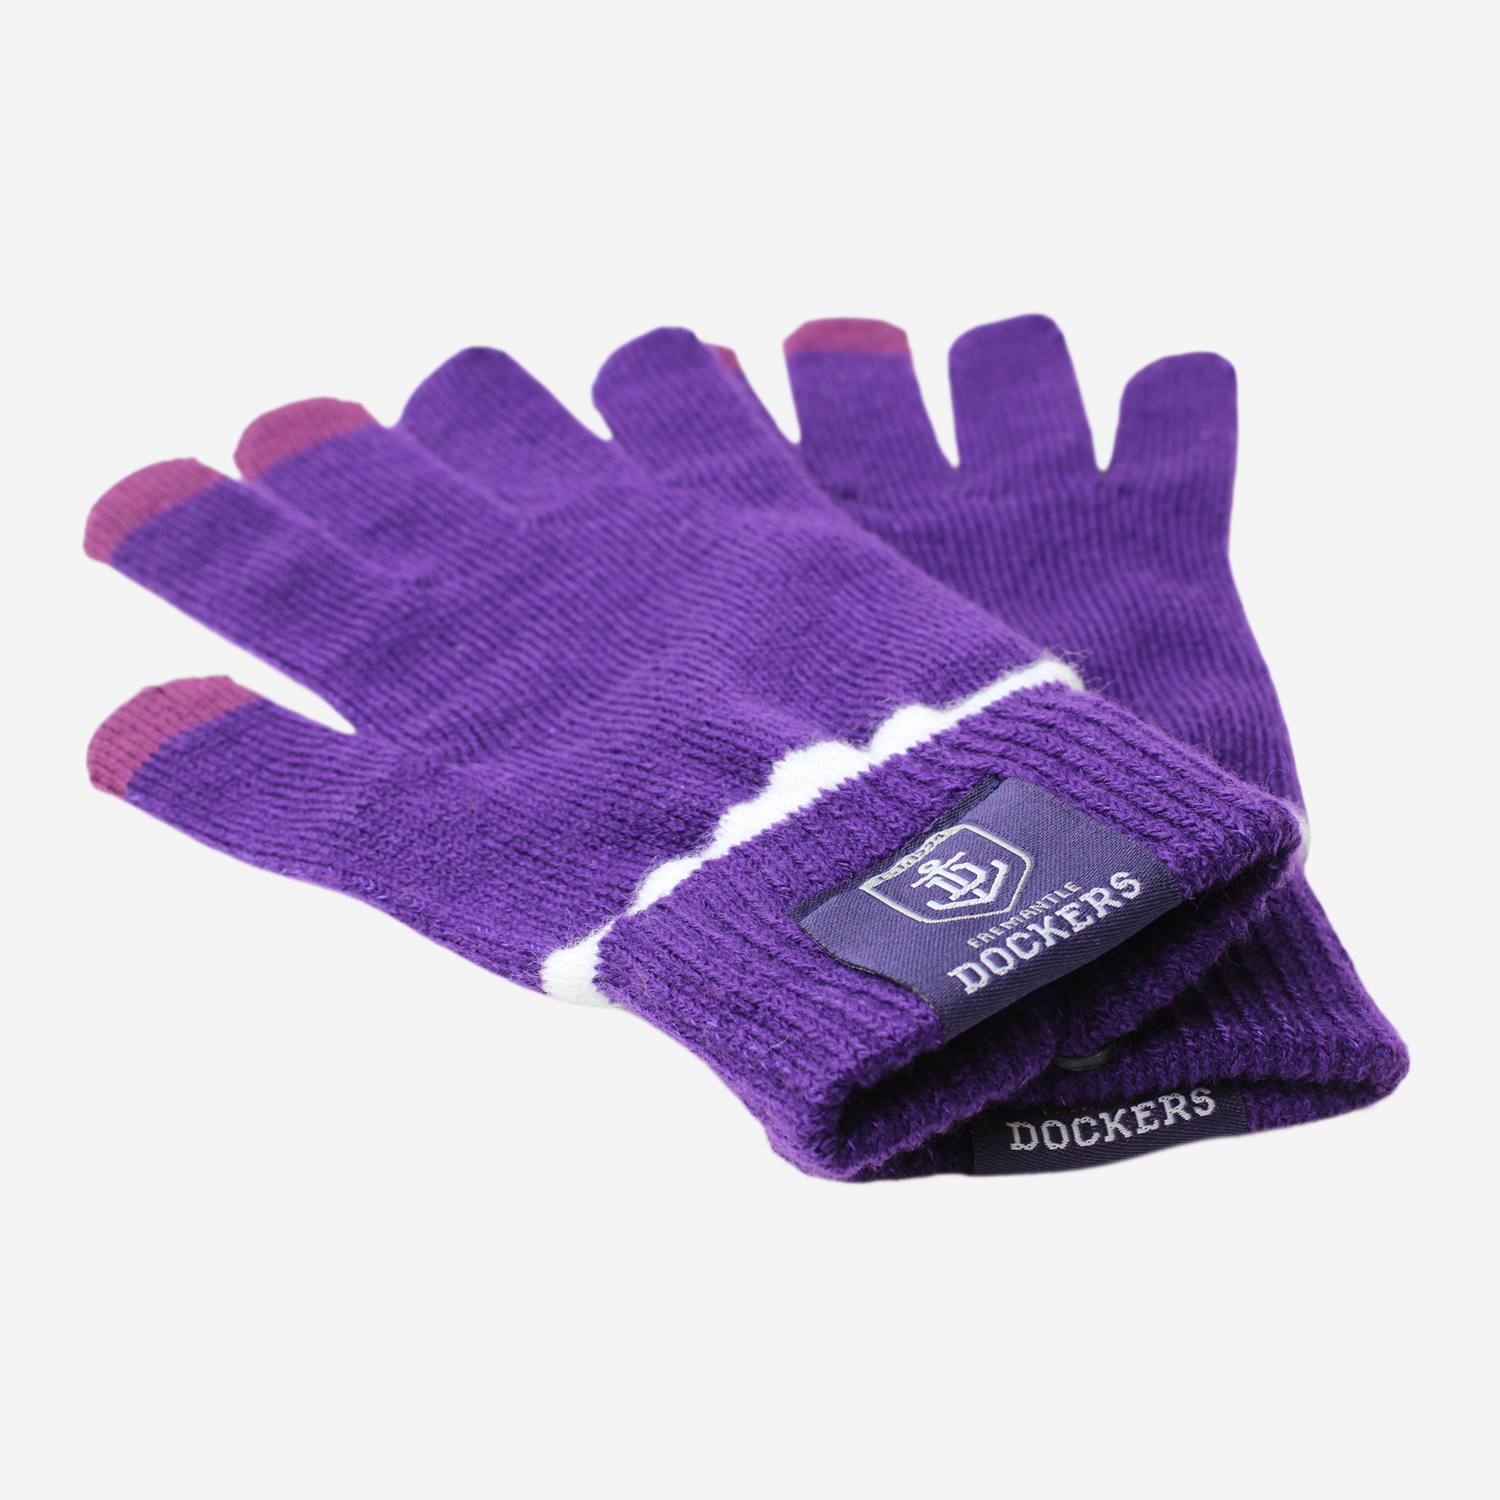 AFL Team Touchscreen Gloves